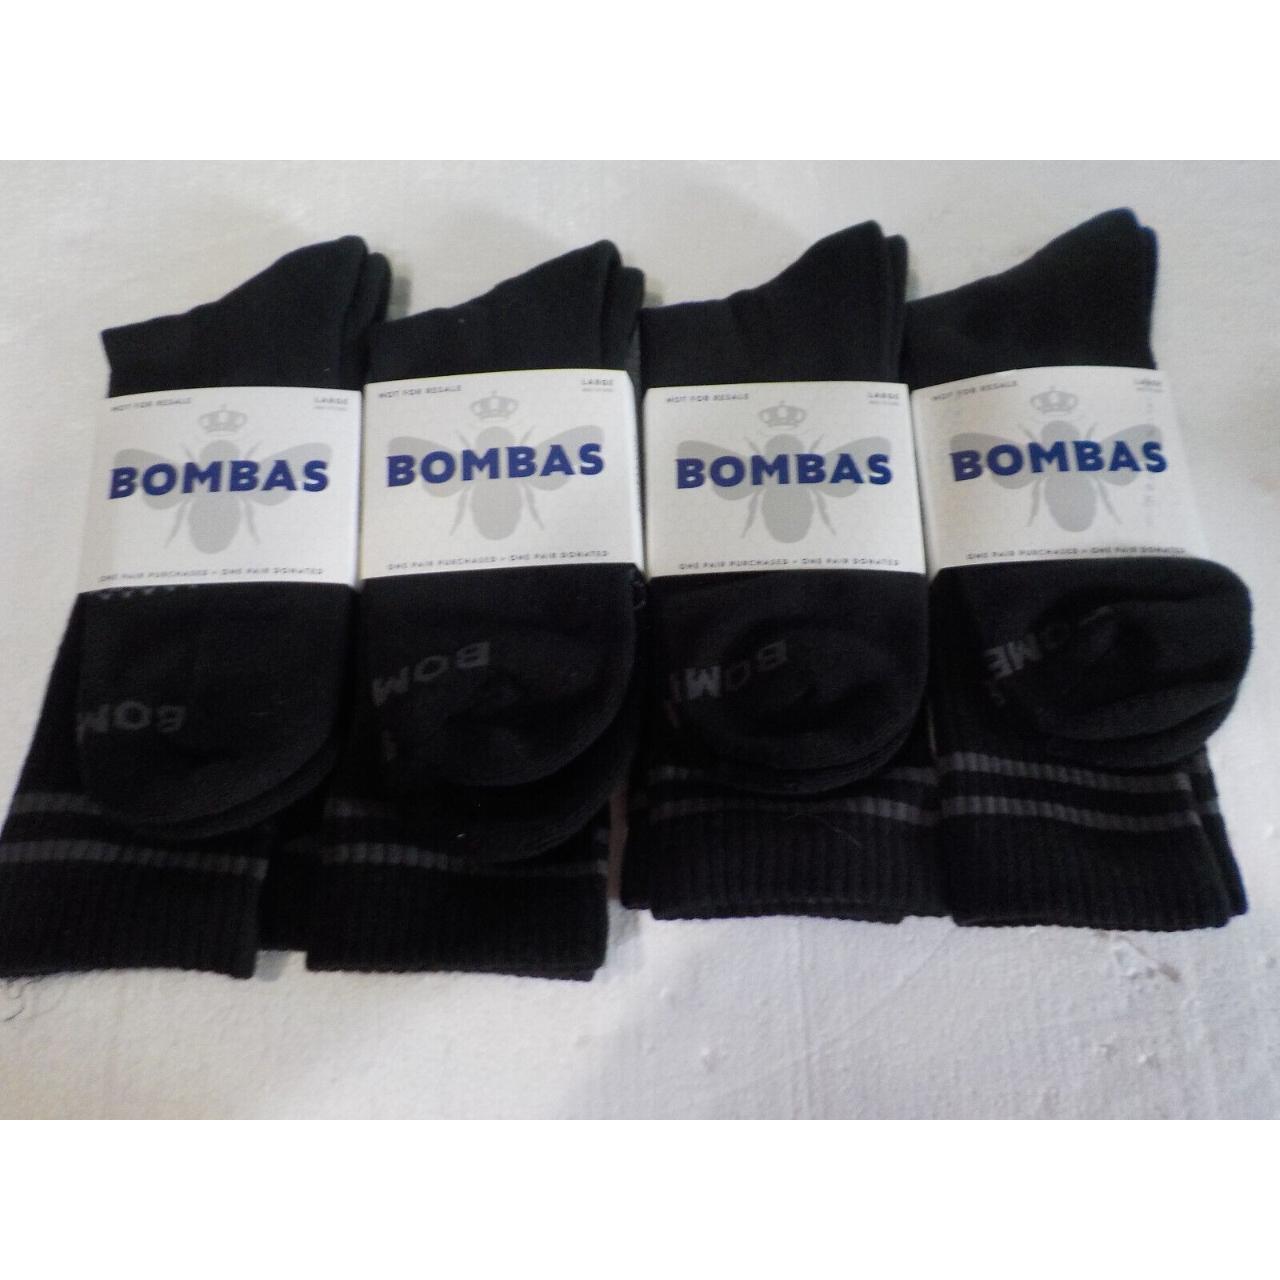 Bombas Men's Black and Grey Socks (2)